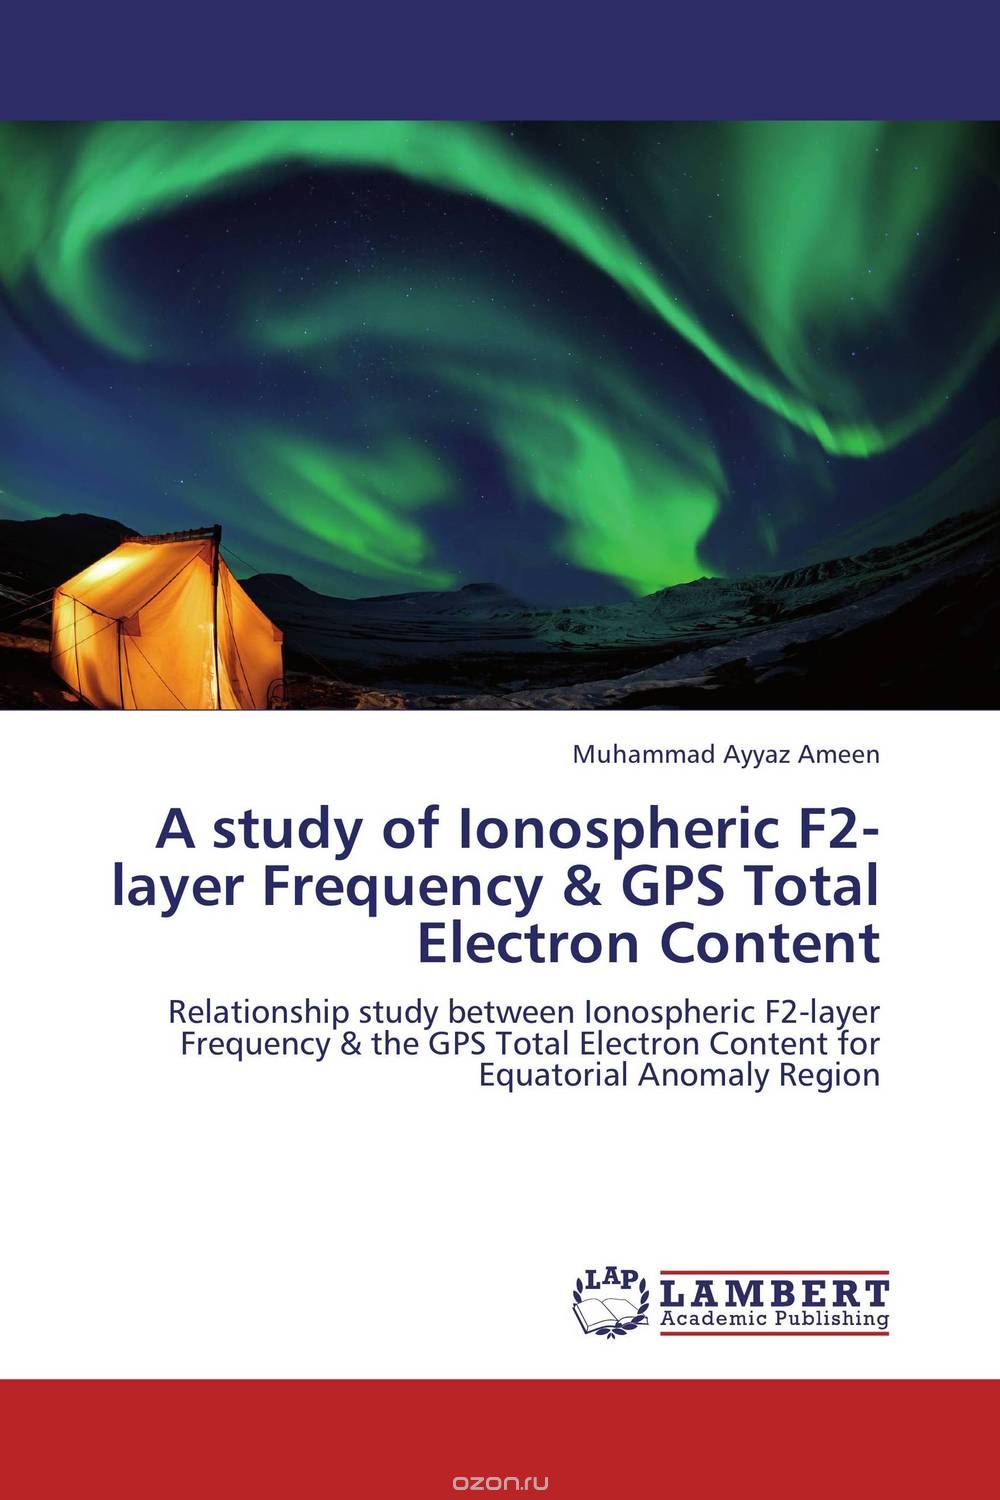 Скачать книгу "A study of Ionospheric F2-layer Frequency & GPS Total Electron Content"